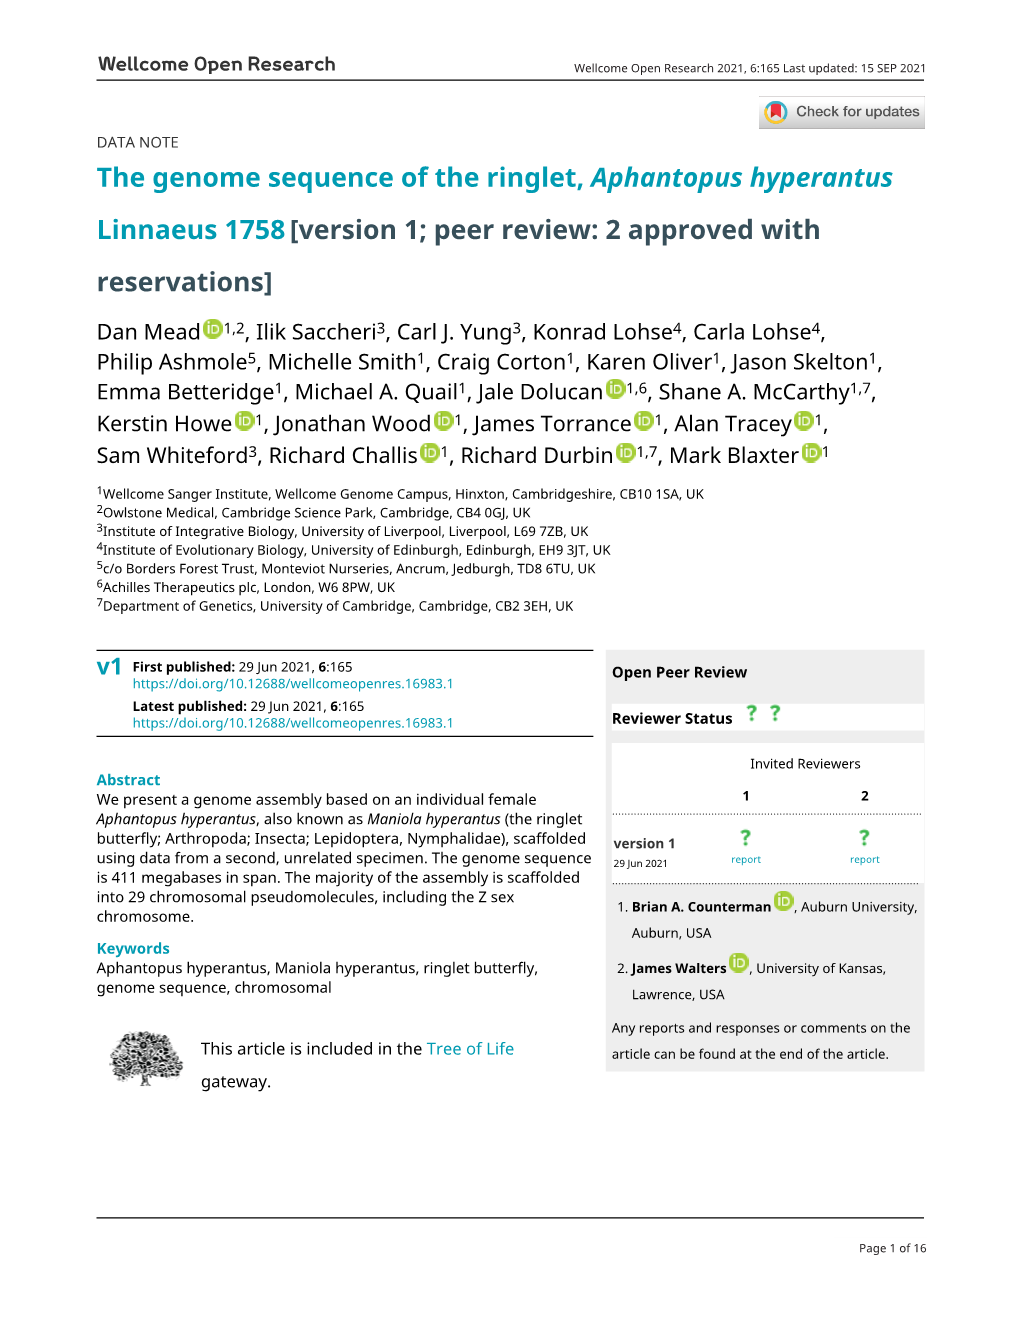 The Genome Sequence of the Ringlet, Aphantopus Hyperantus Linnaeus